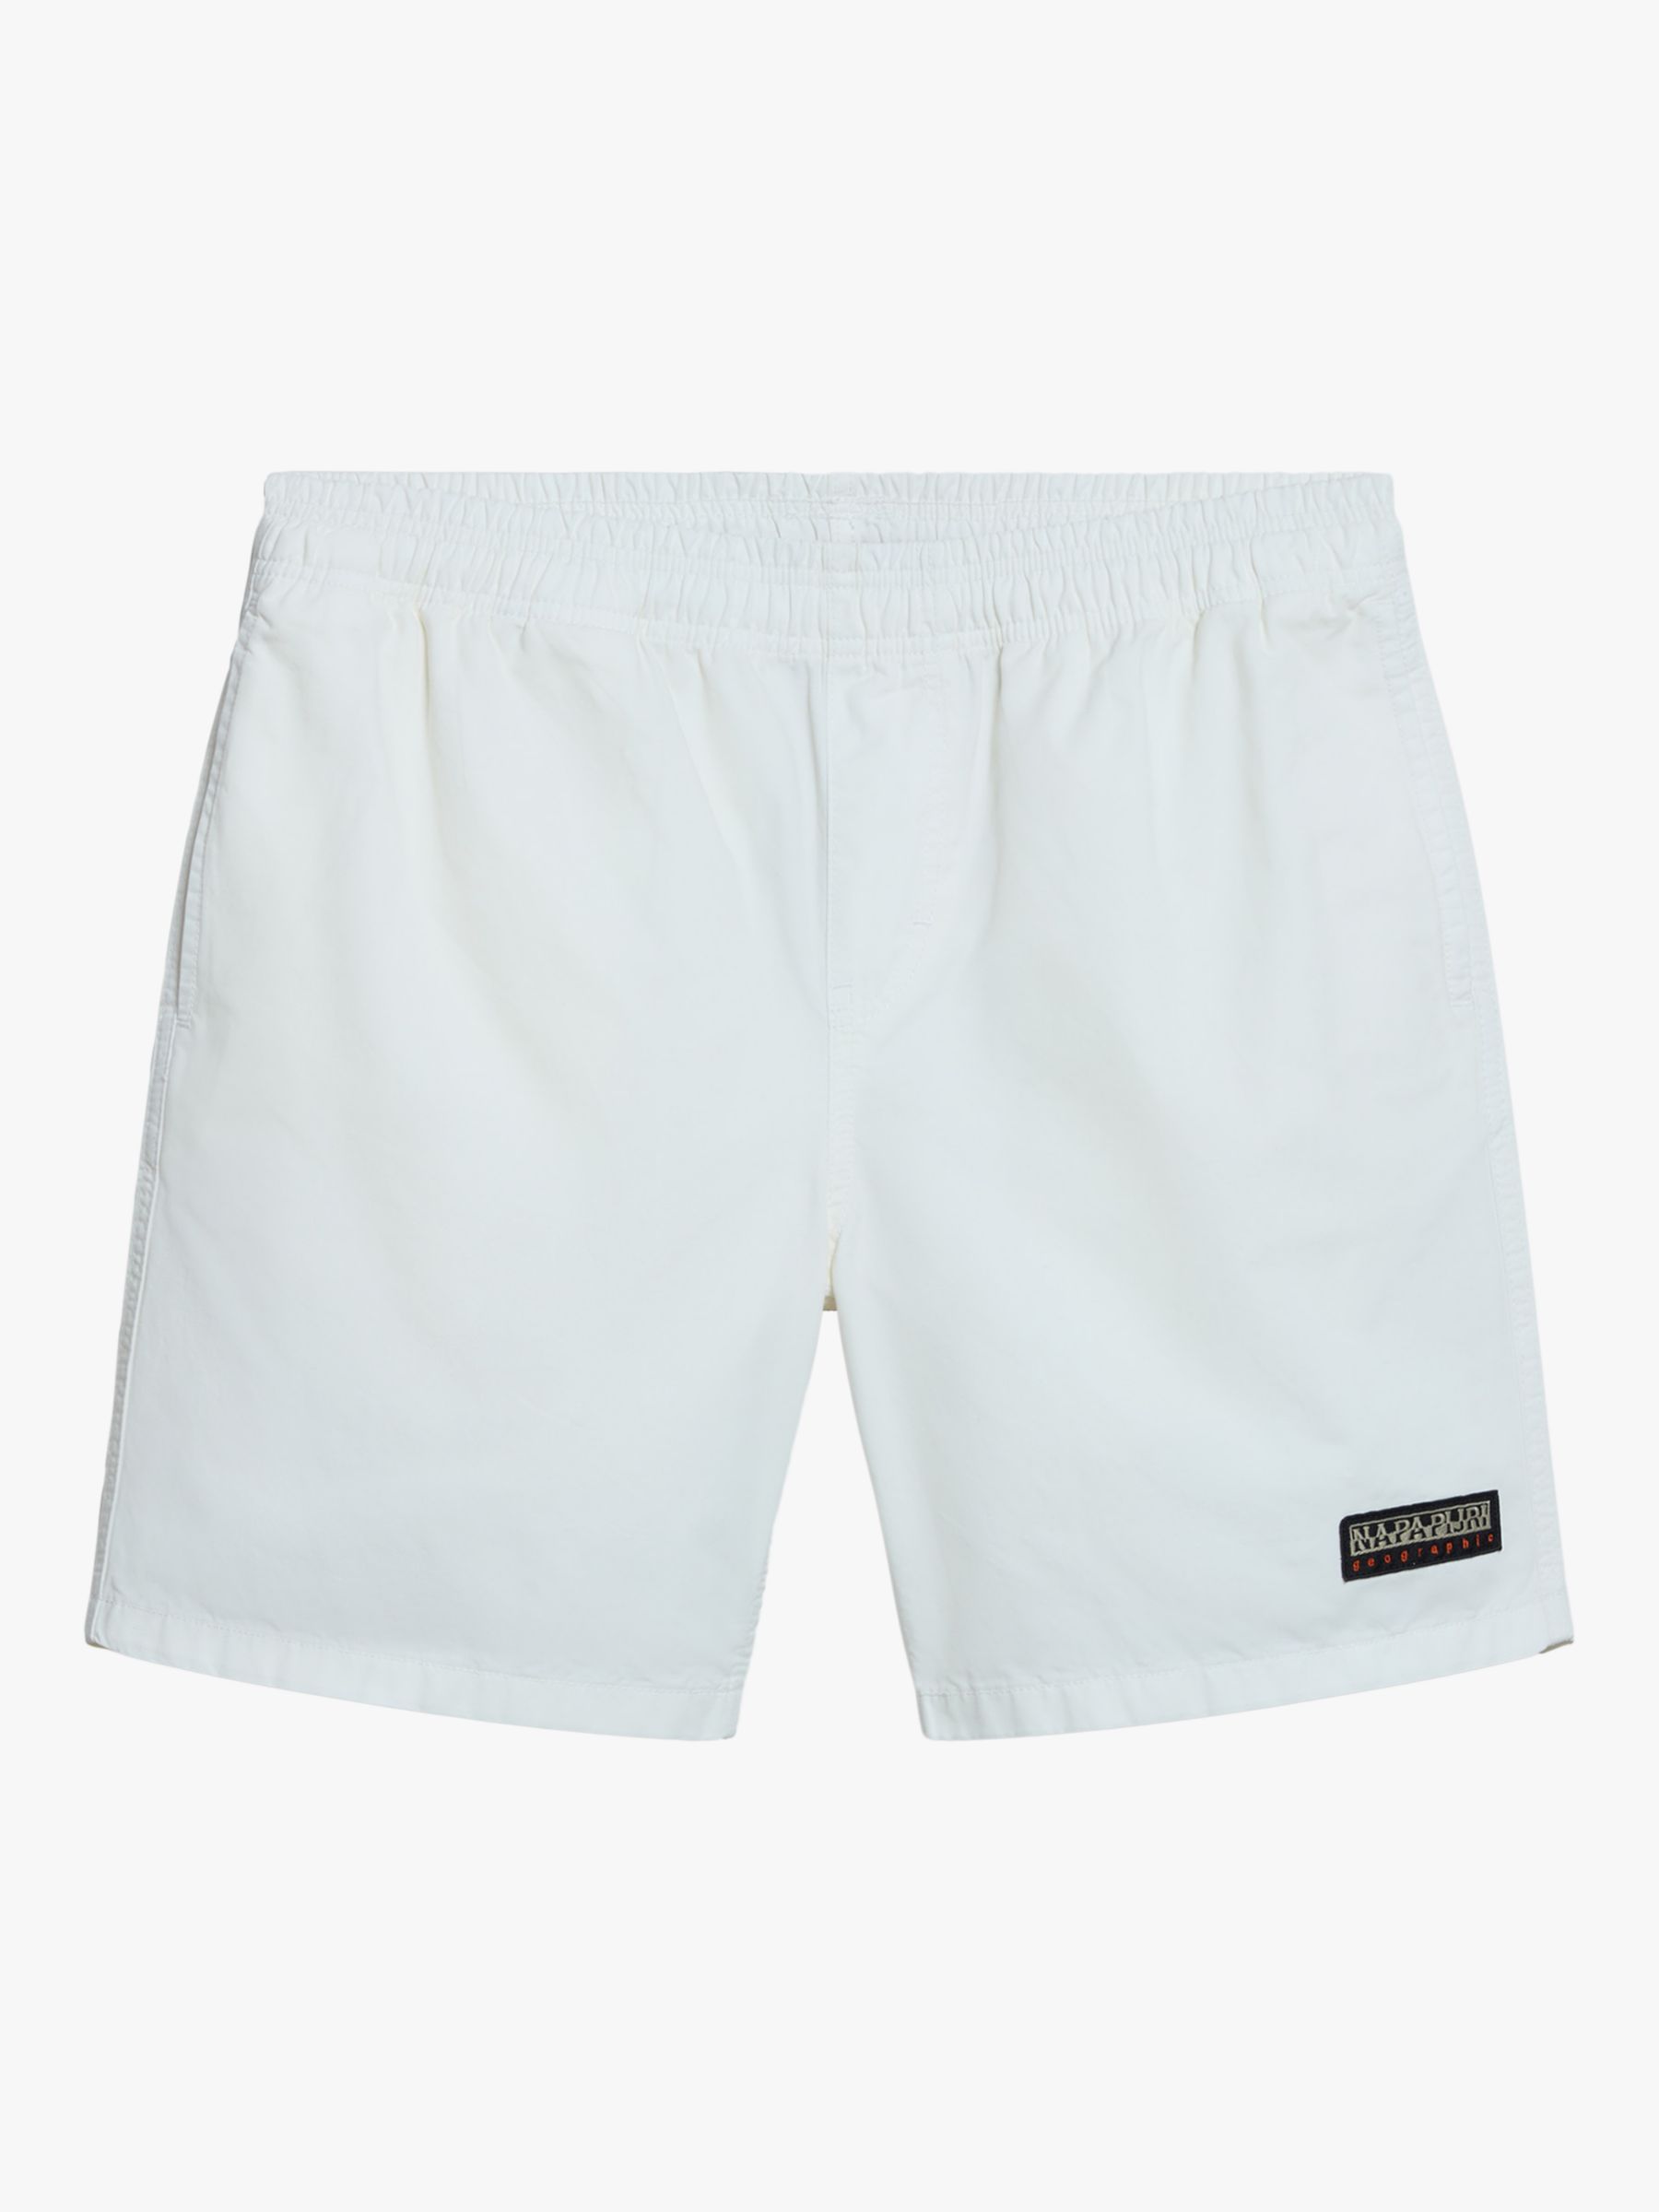 Napapijri Cotton Byod Bermuda Shorts, White, L